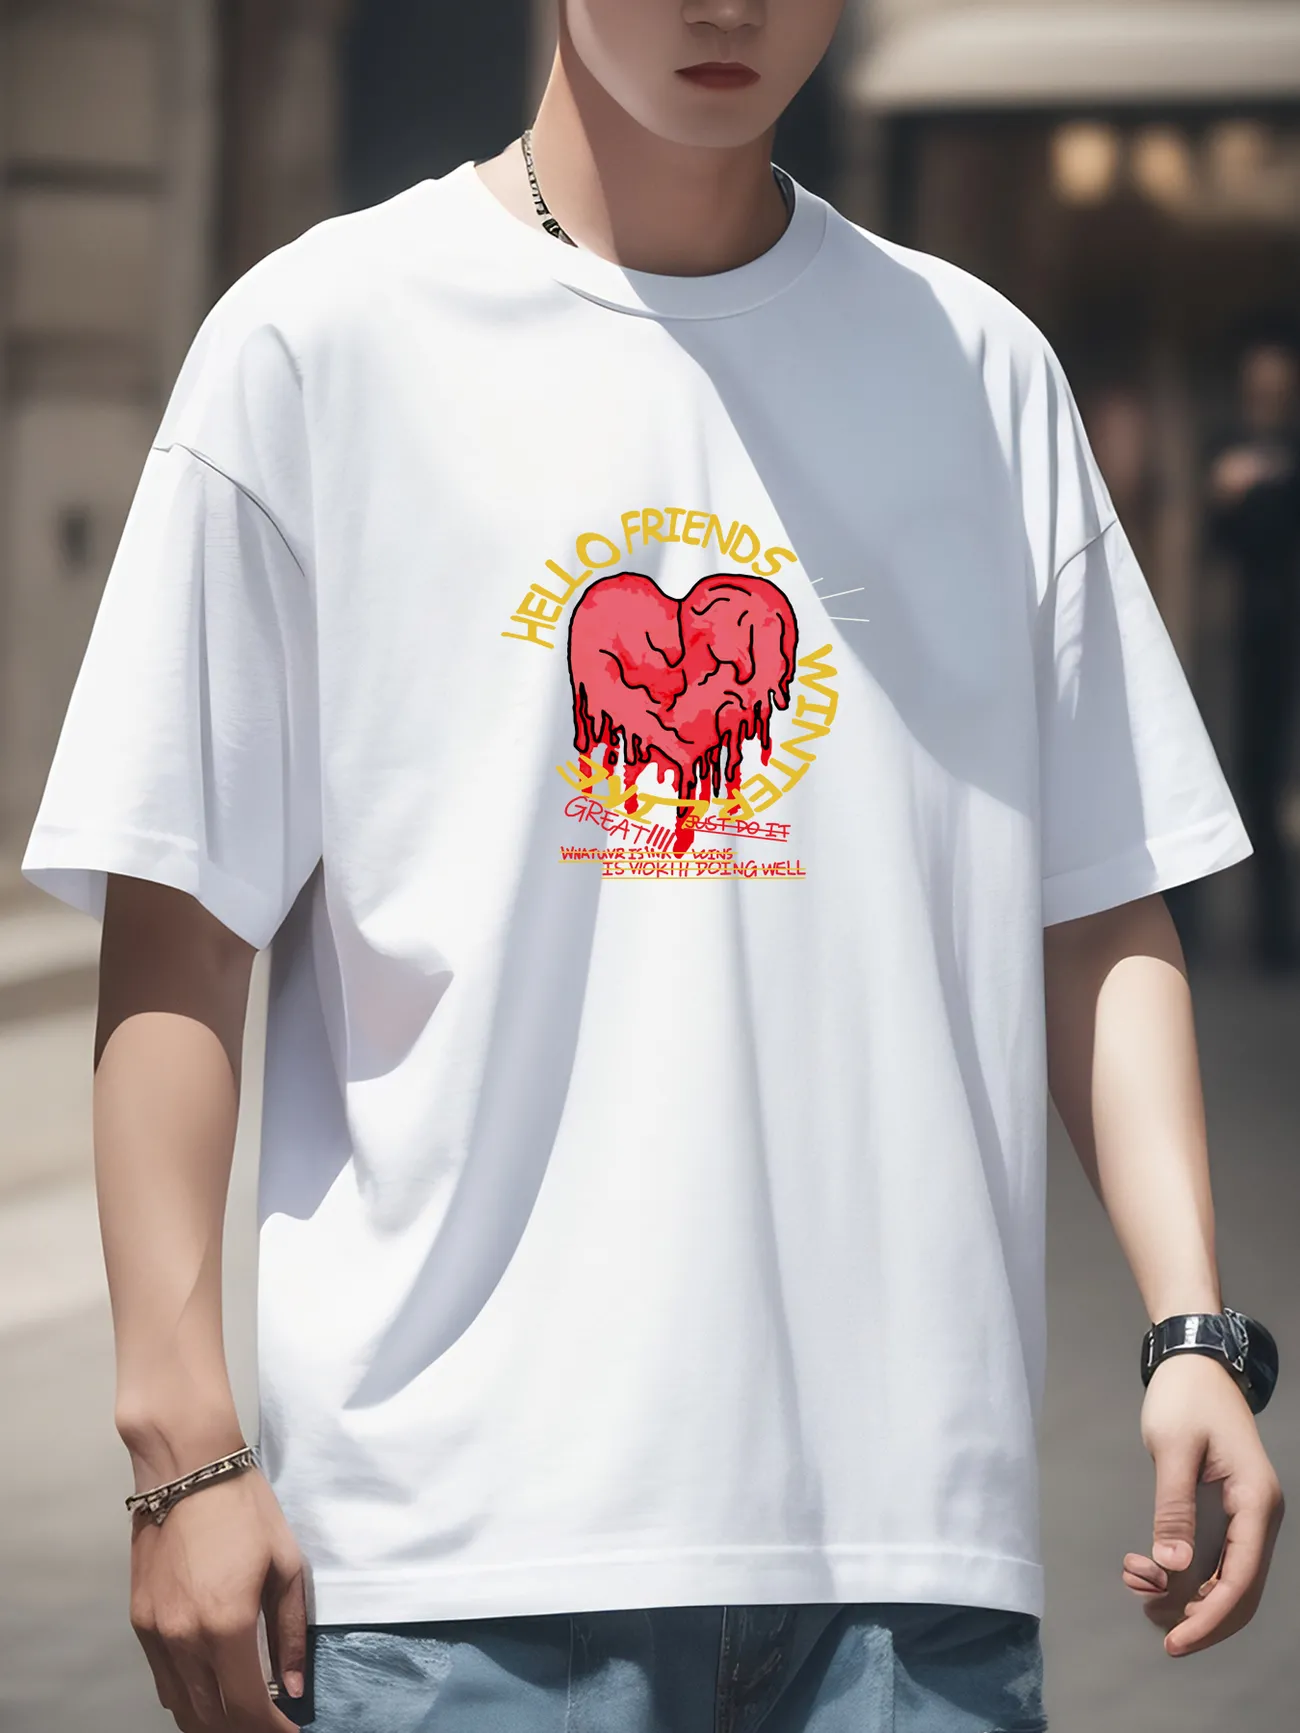 Melting Heart Print, Men's Trendy Cotton T-shirt, Casual Slightly